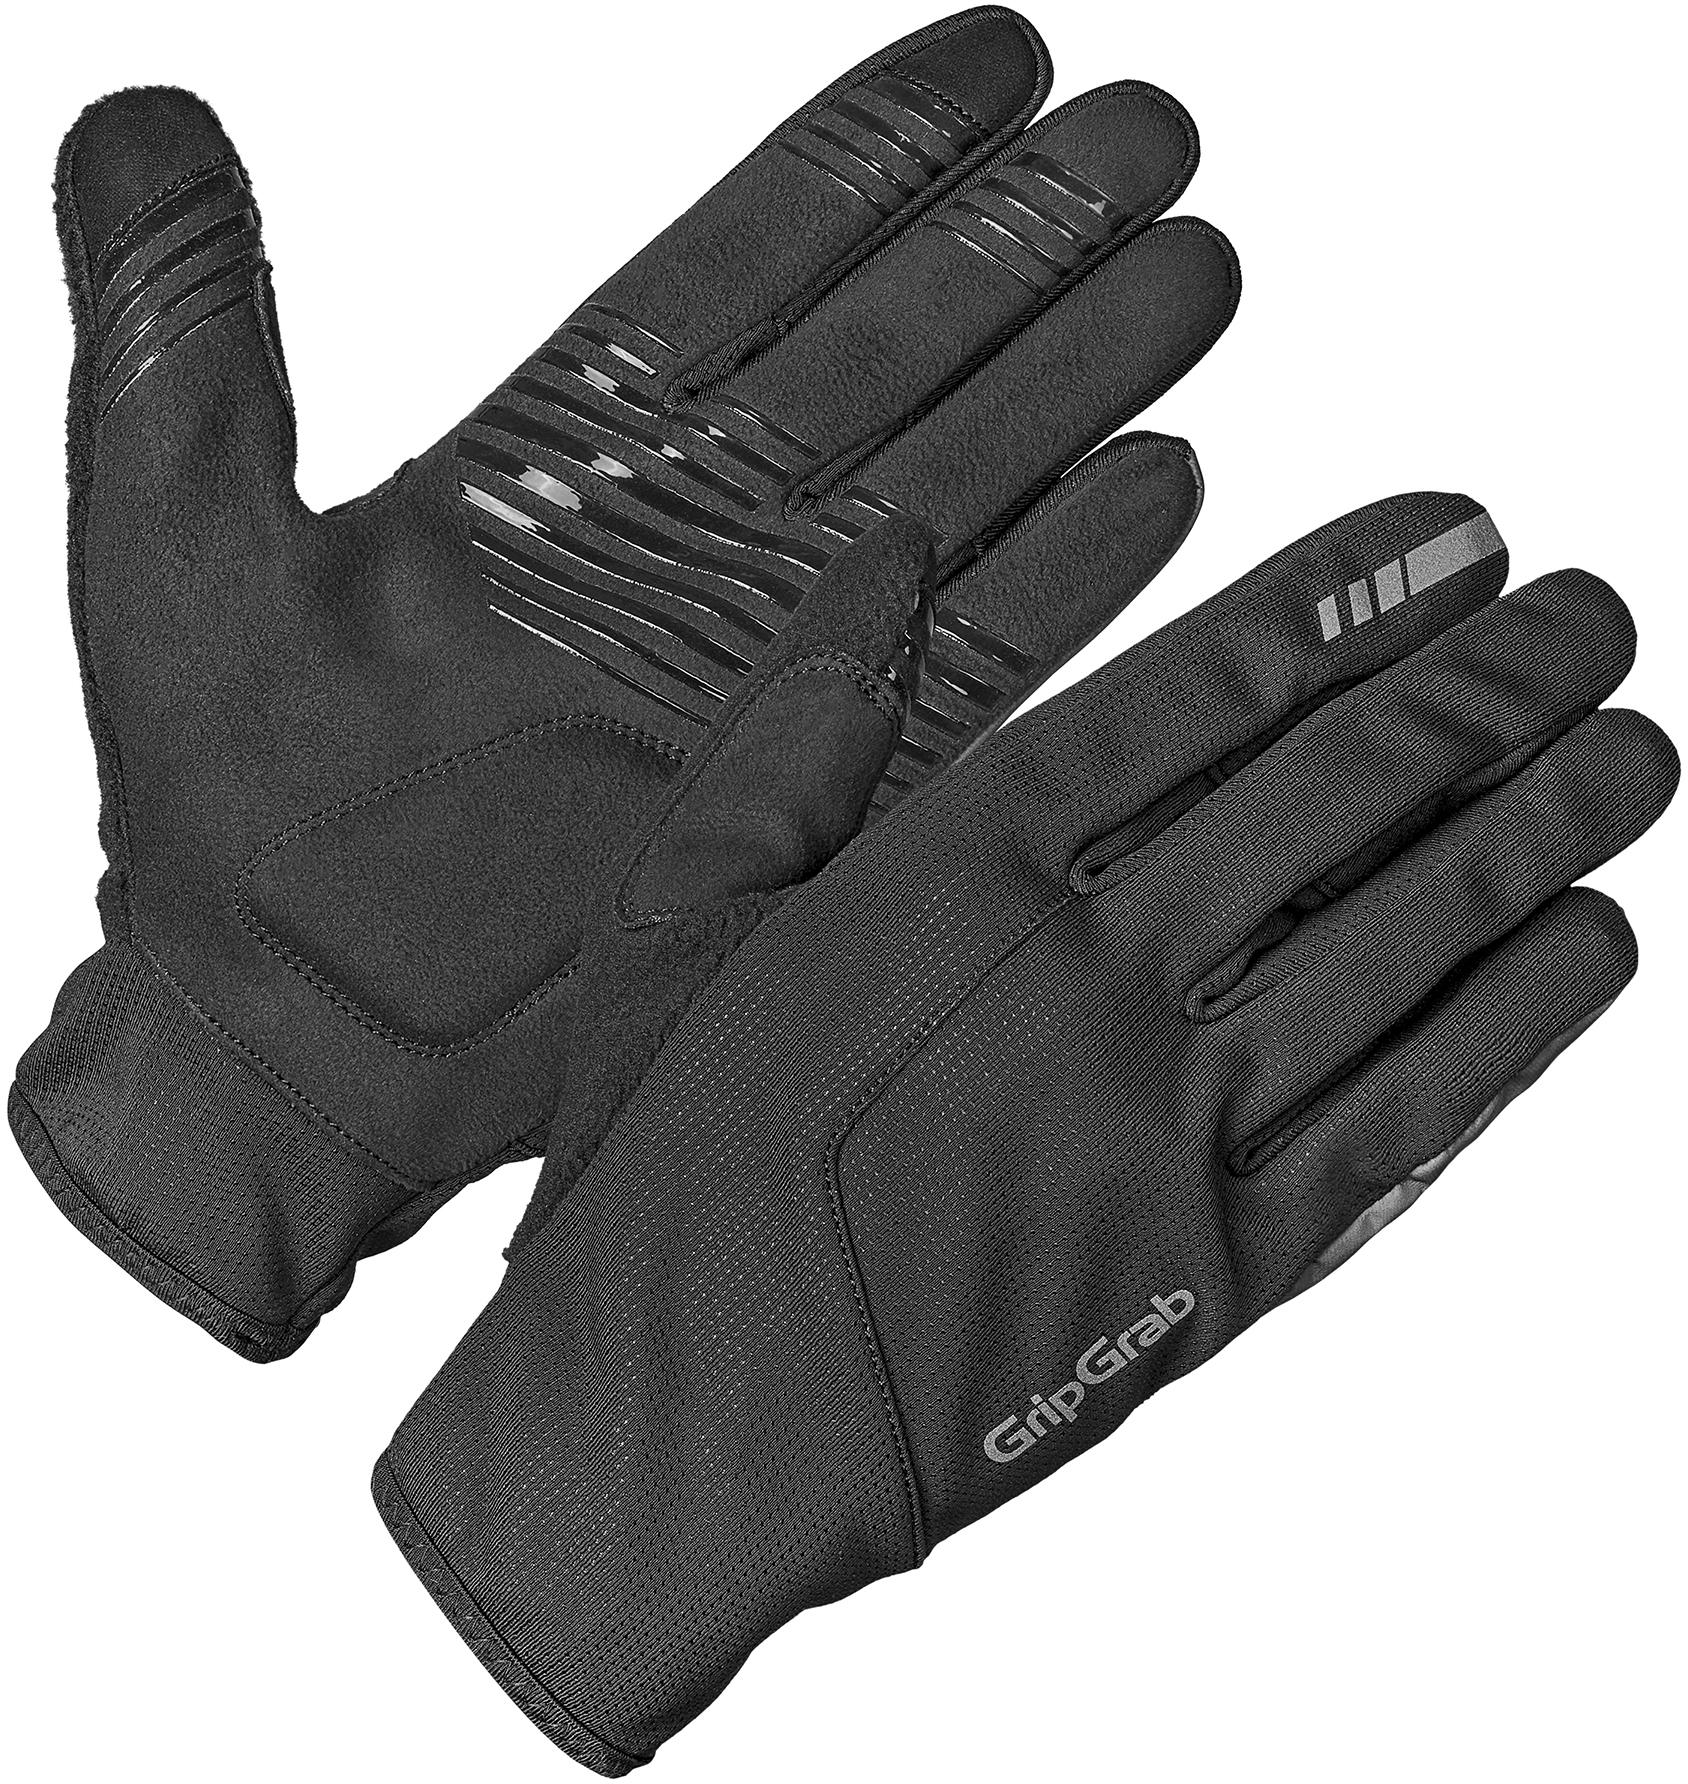 Gripgrab Hurricane 2 Windproof Spring-autumn Gloves - Black